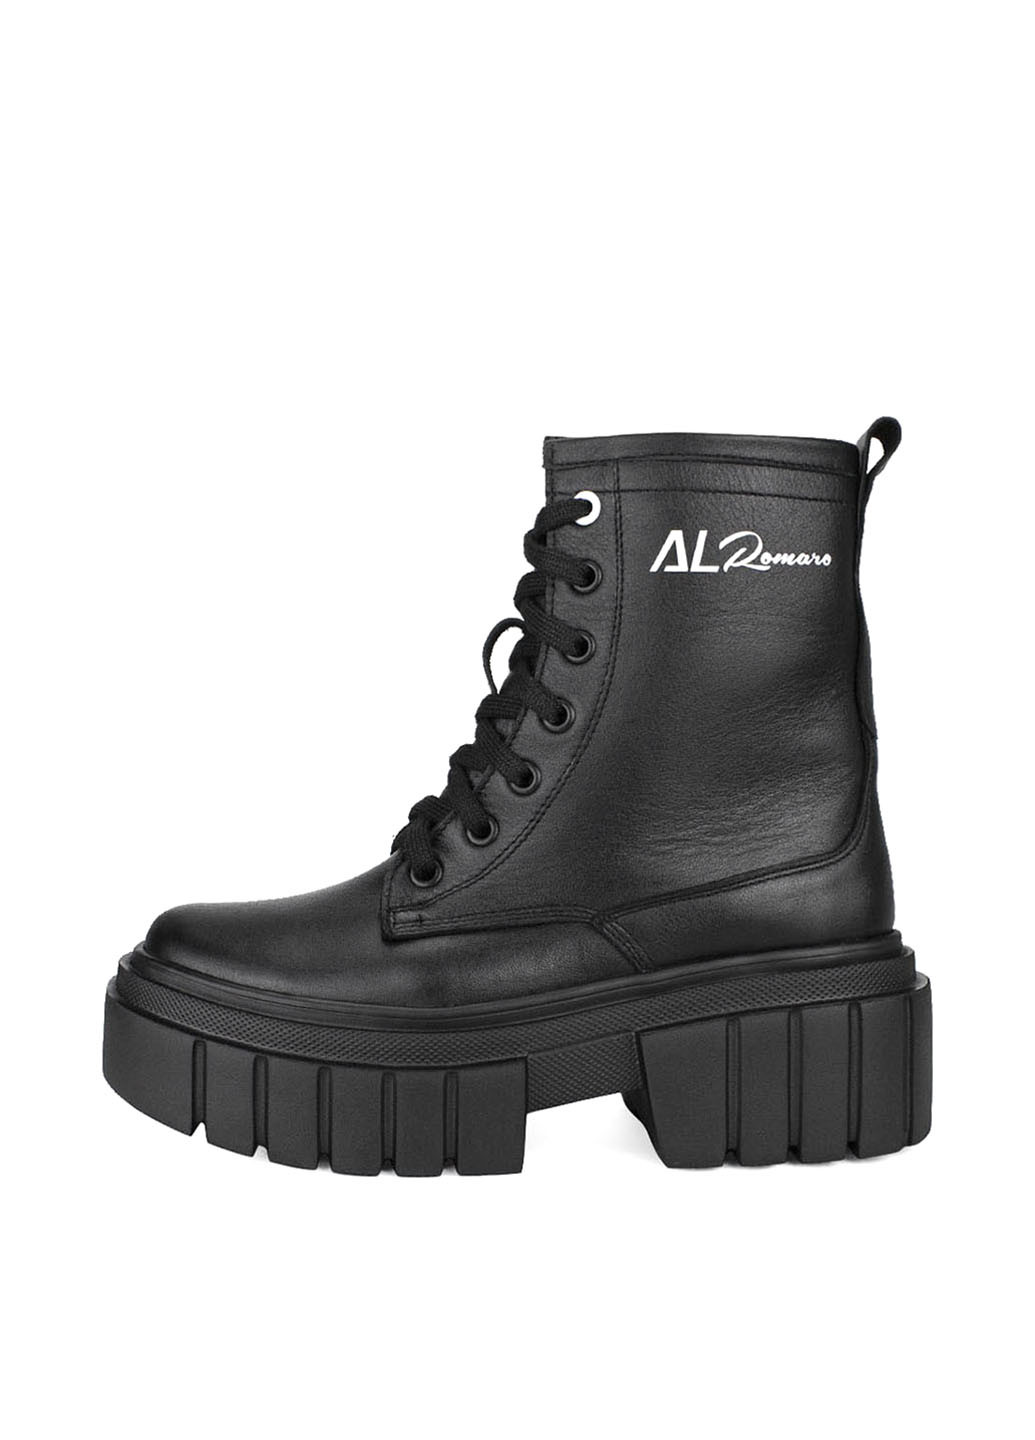 Зимние ботинки Alromaro со шнуровкой